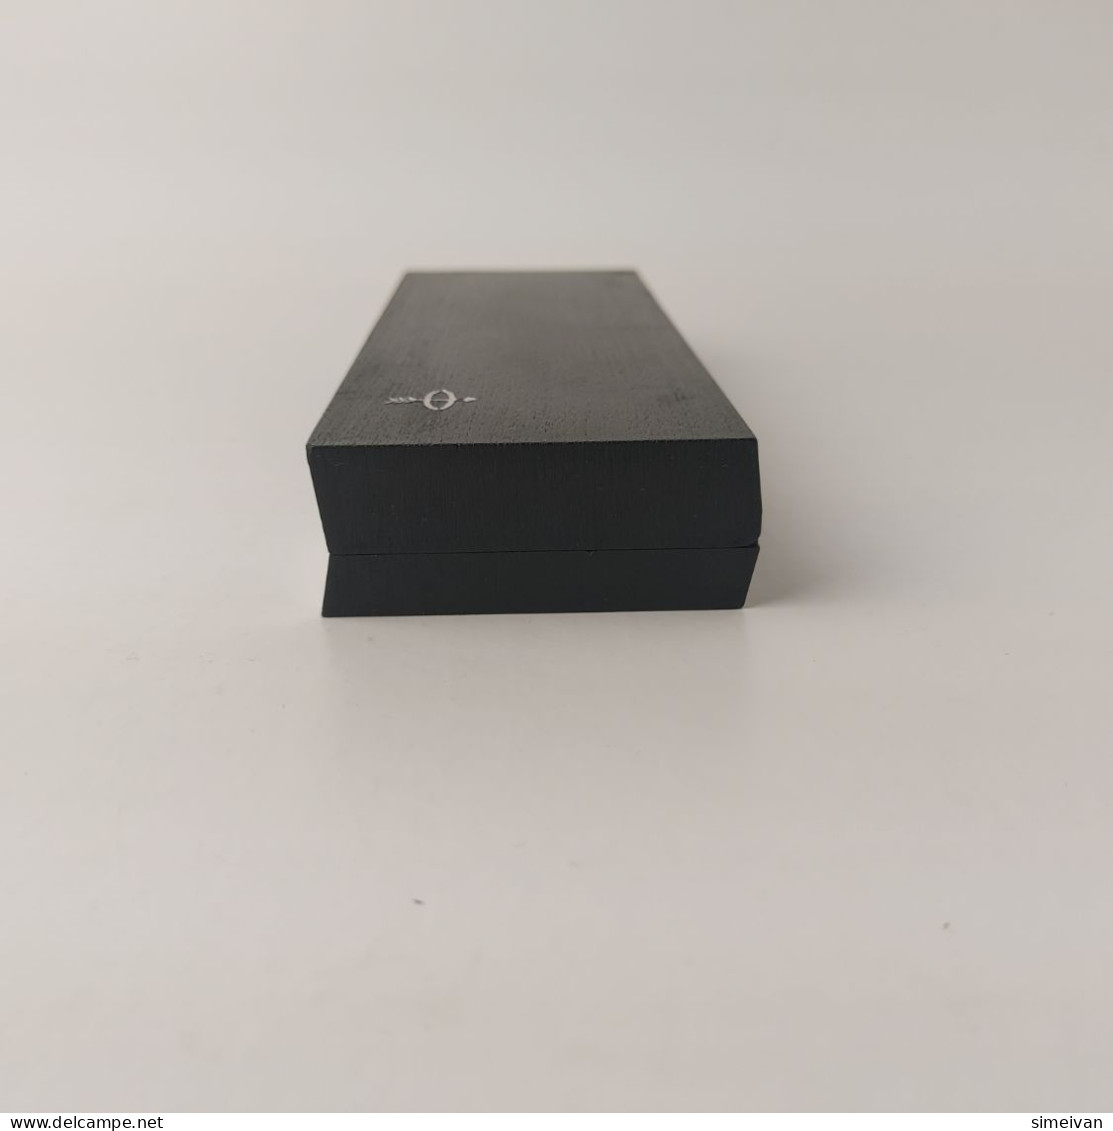 Parker Vintage Black and Silver Plastic Box One Slot Empty Hardcase #5478